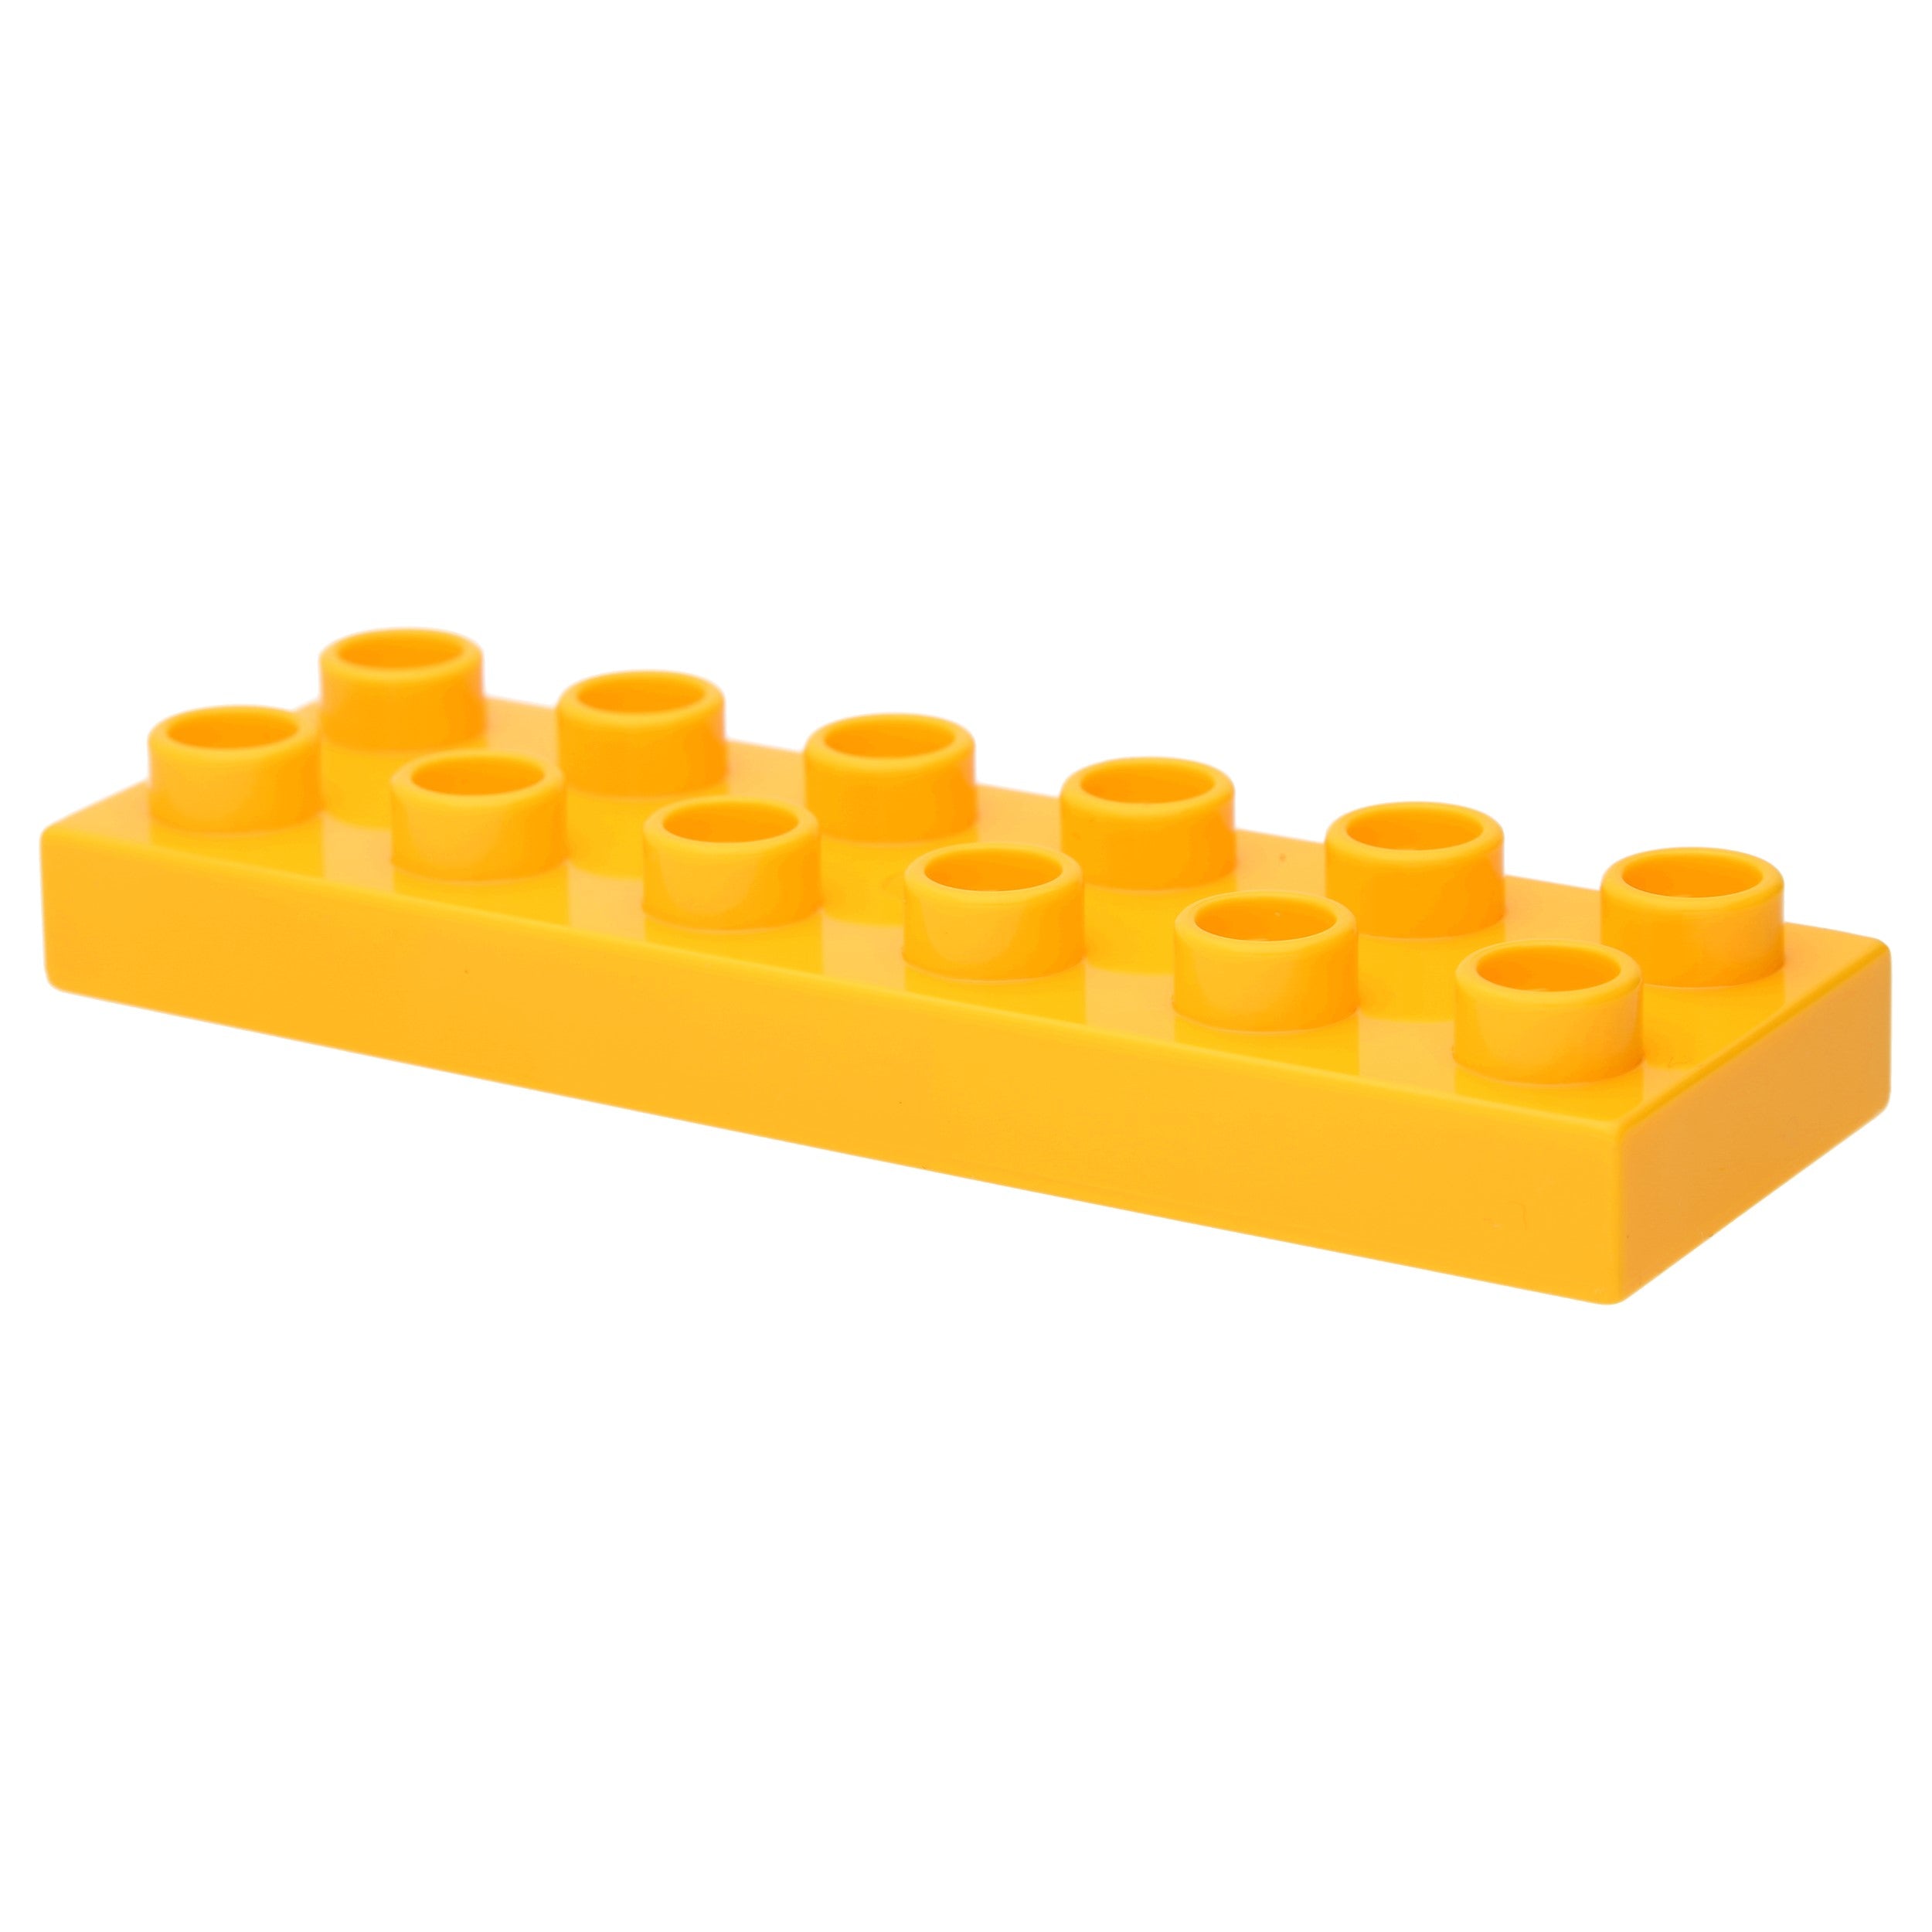 Lego Duplo Plates - 2 x 6